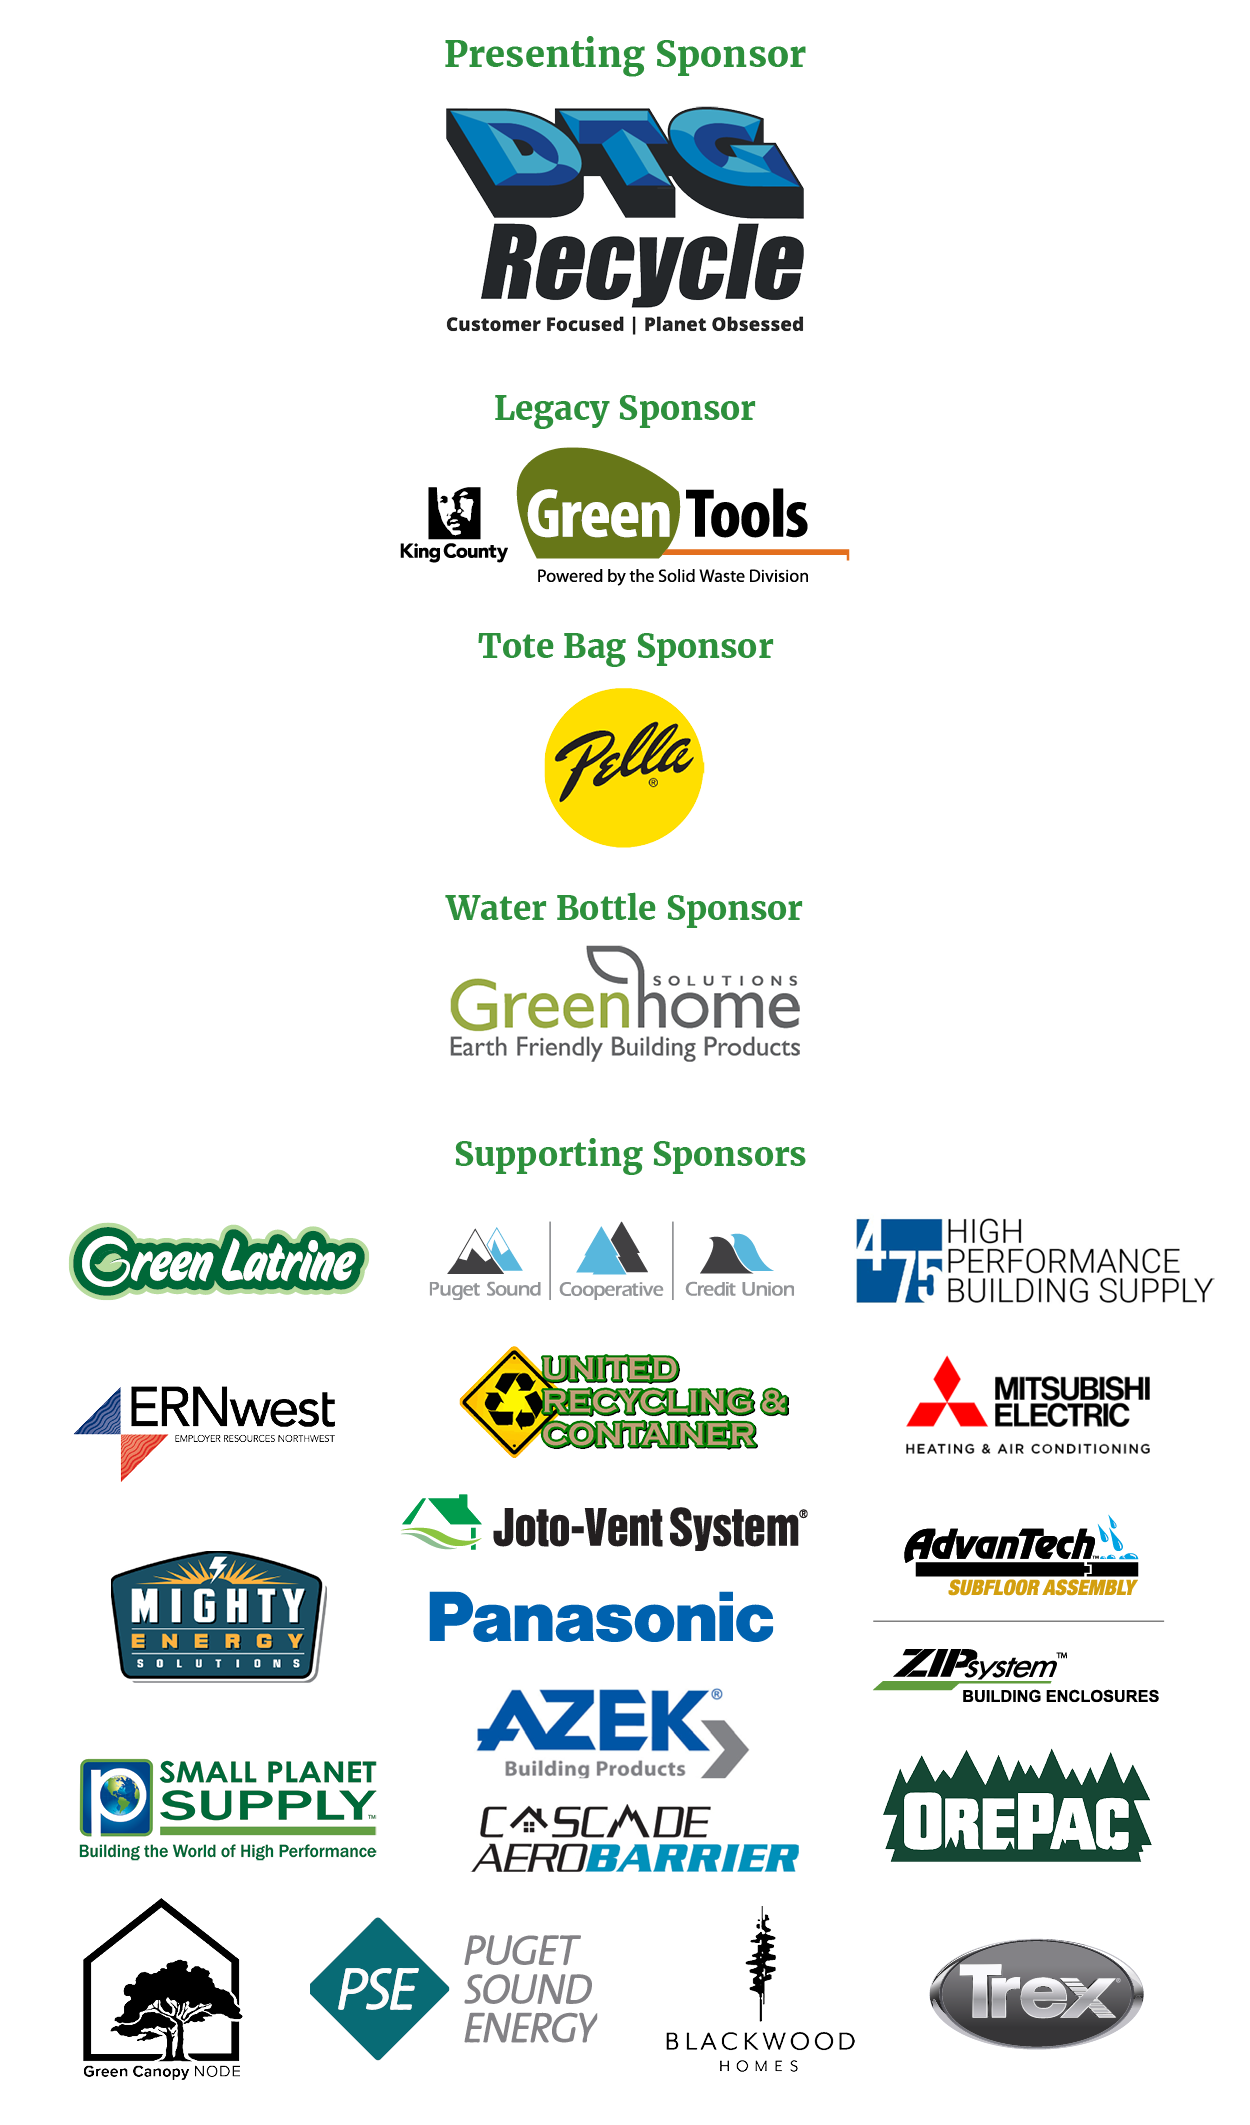 2022 Built Green Conference Sponsors